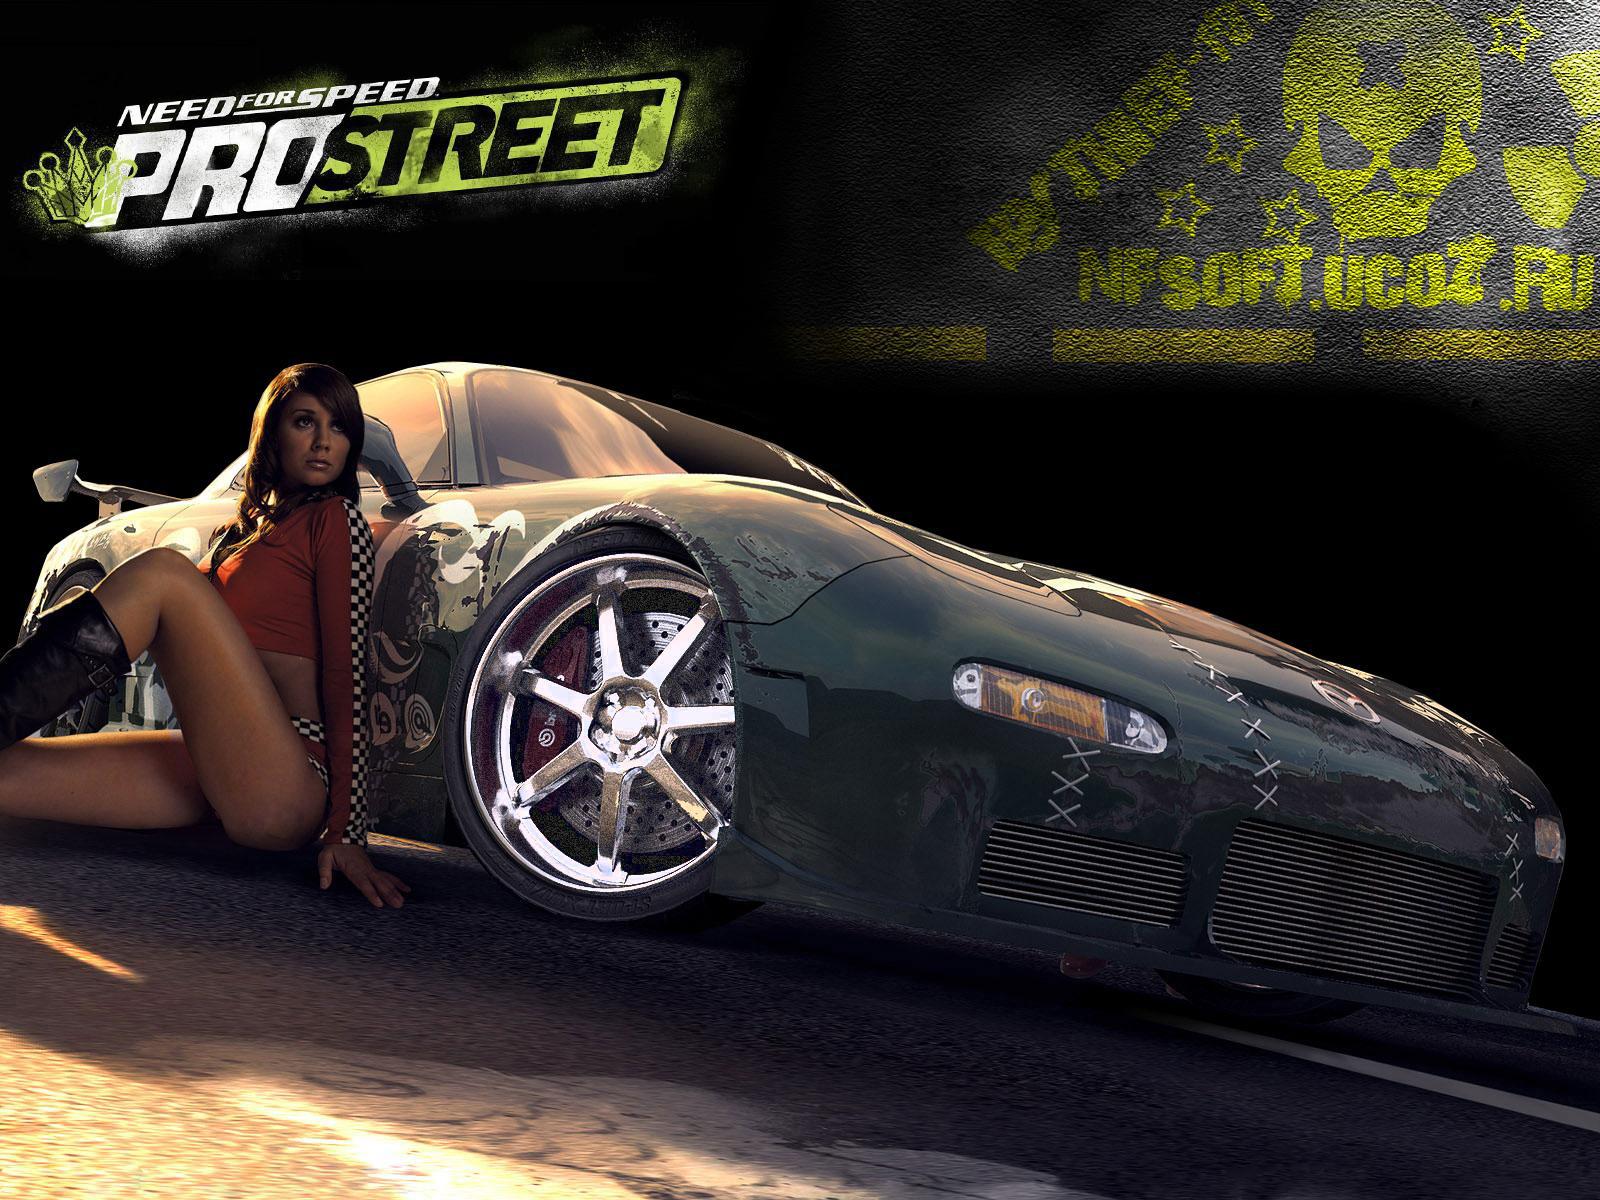 Обои на рабочий стол, ProStreet - Need For Speed World Site.